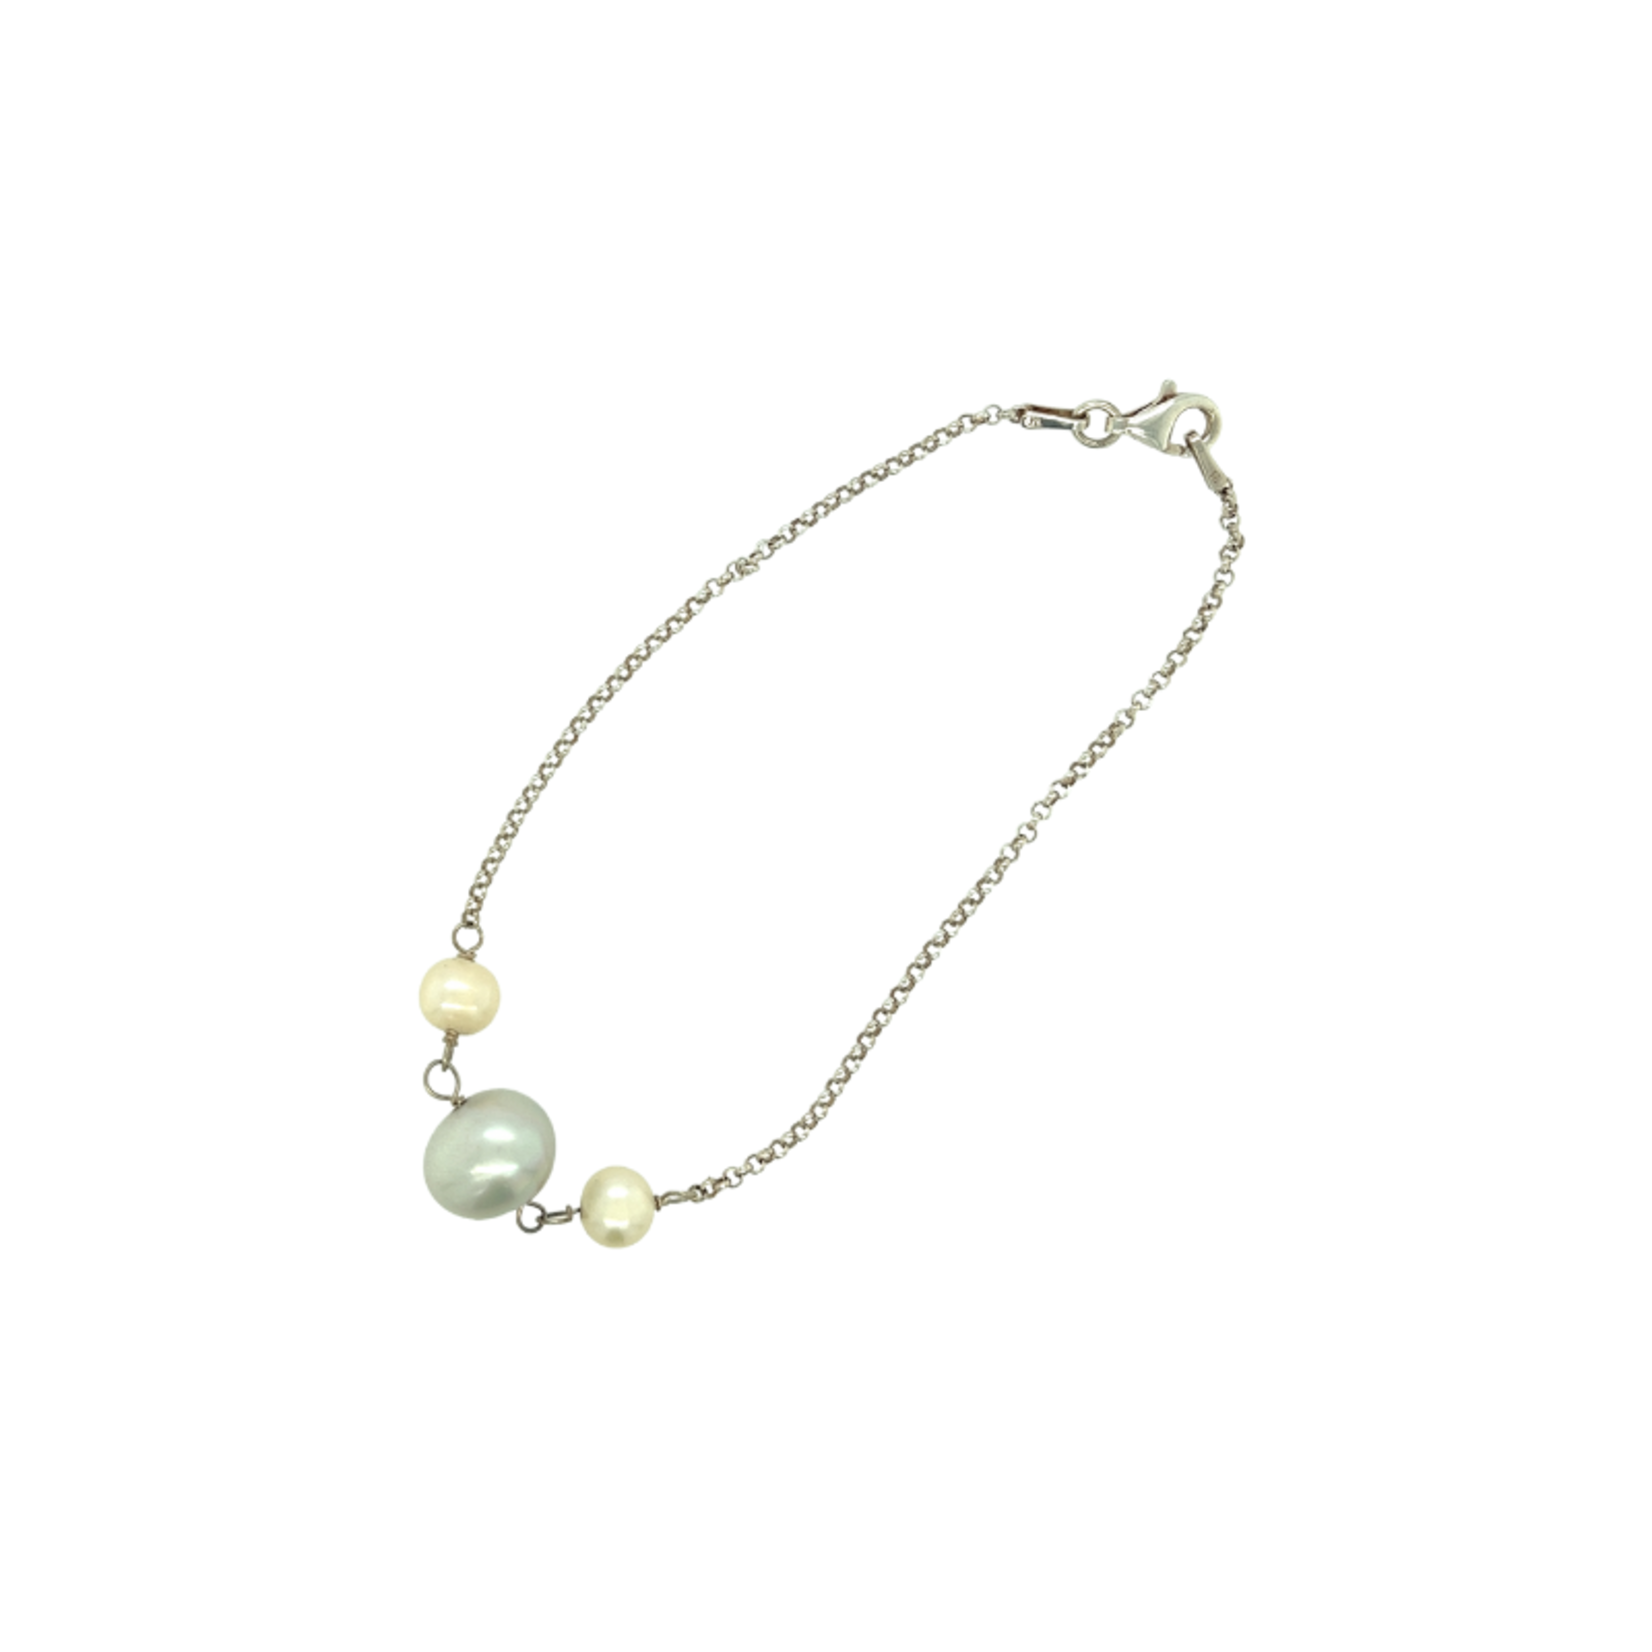 Bracelet grey pearls